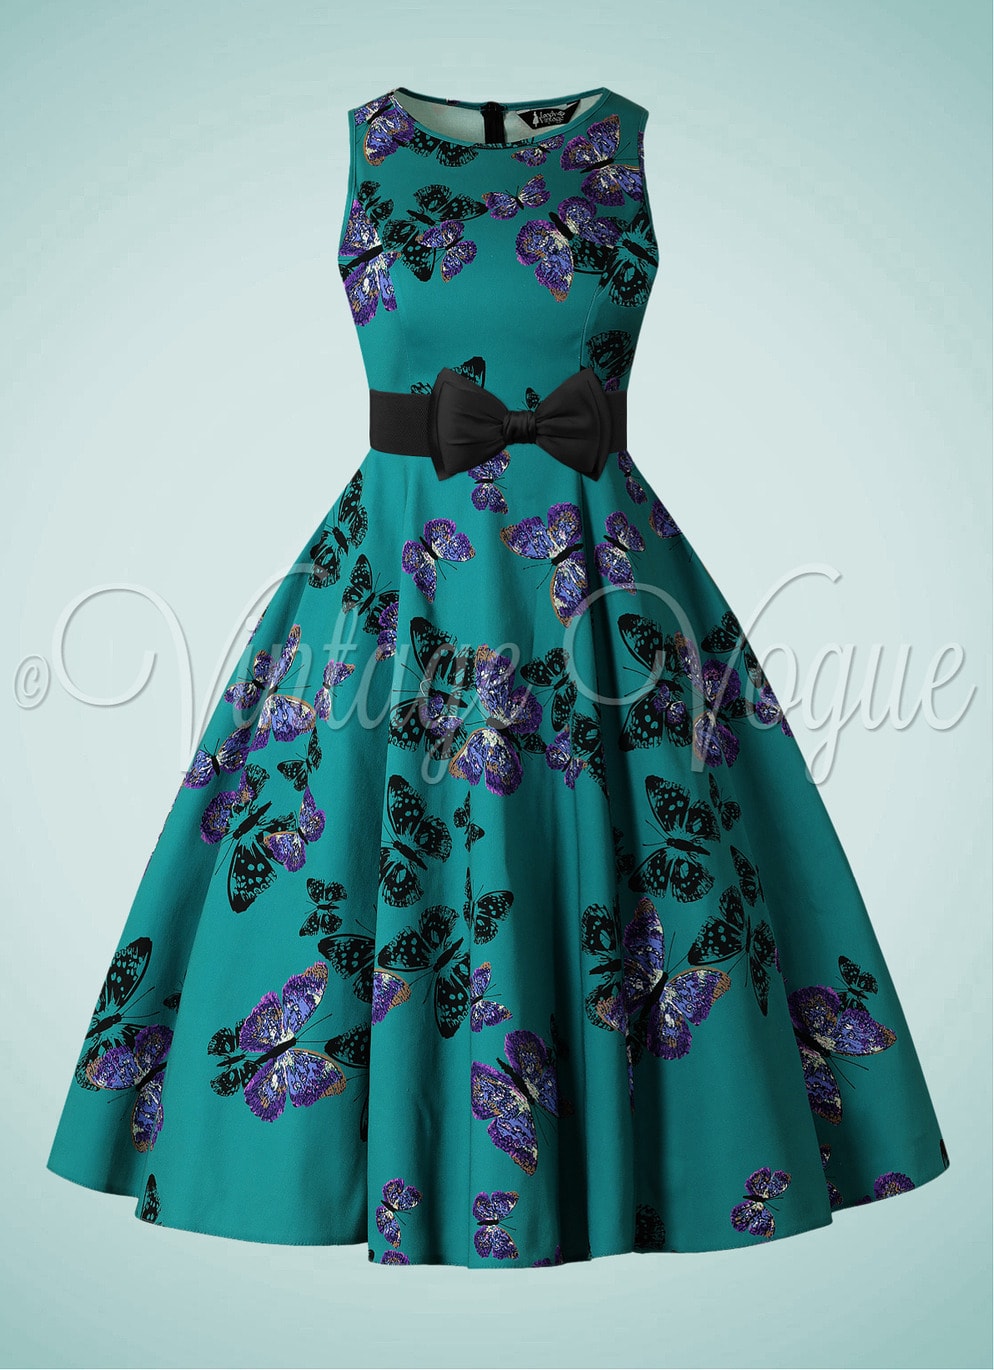 Lady Vintage 50's Retro Schmetterlinge Swing Kleid Butterfly Hepburn Dress in Petrol Grün Türkis Blau 50er Jahre Petticoat Damenkleid Floral Hochzeitsgast Elegant